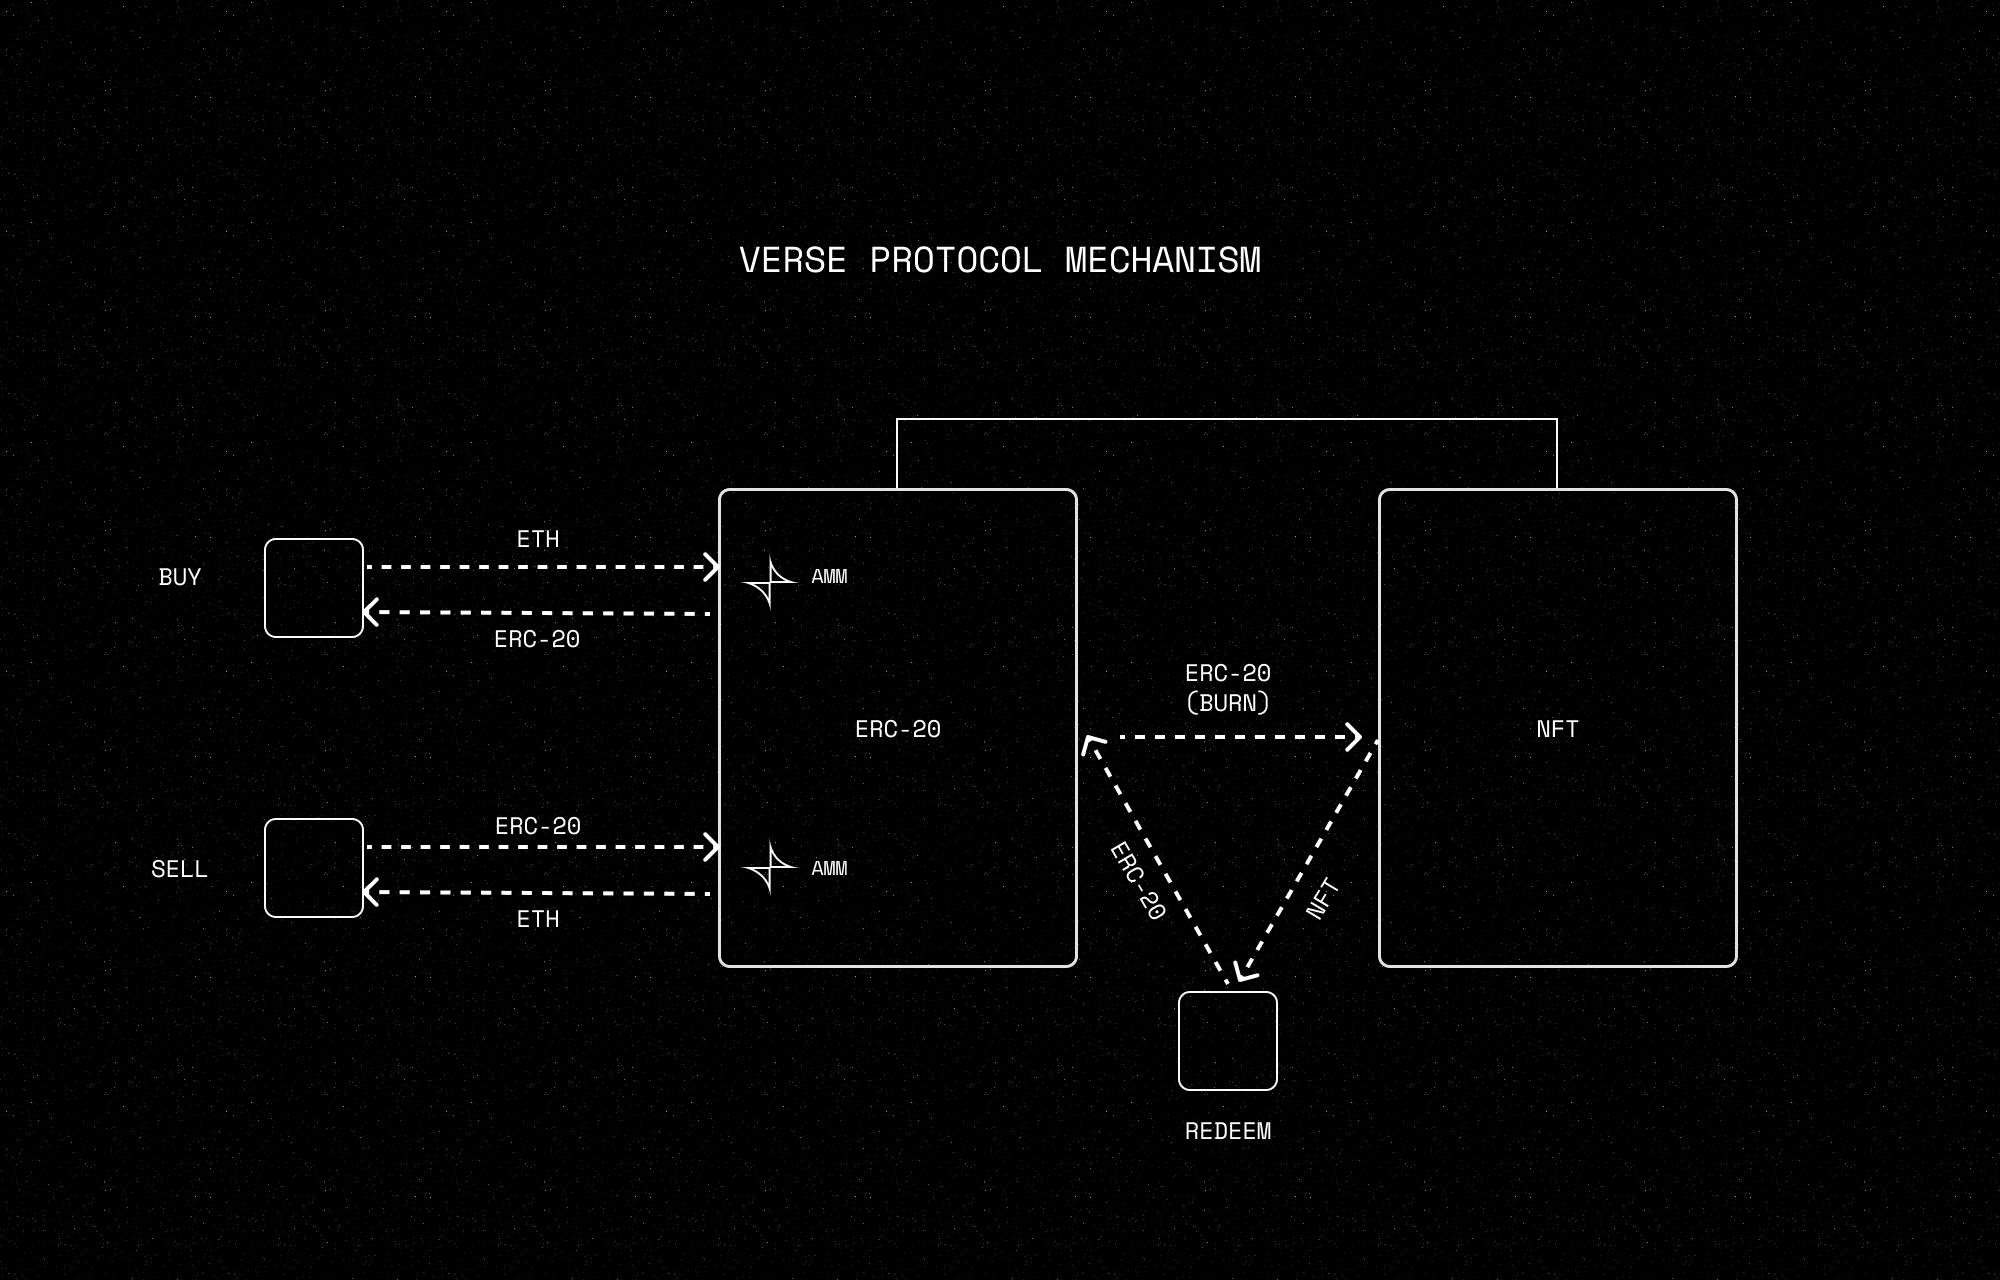 Verse Protocol Mechanism